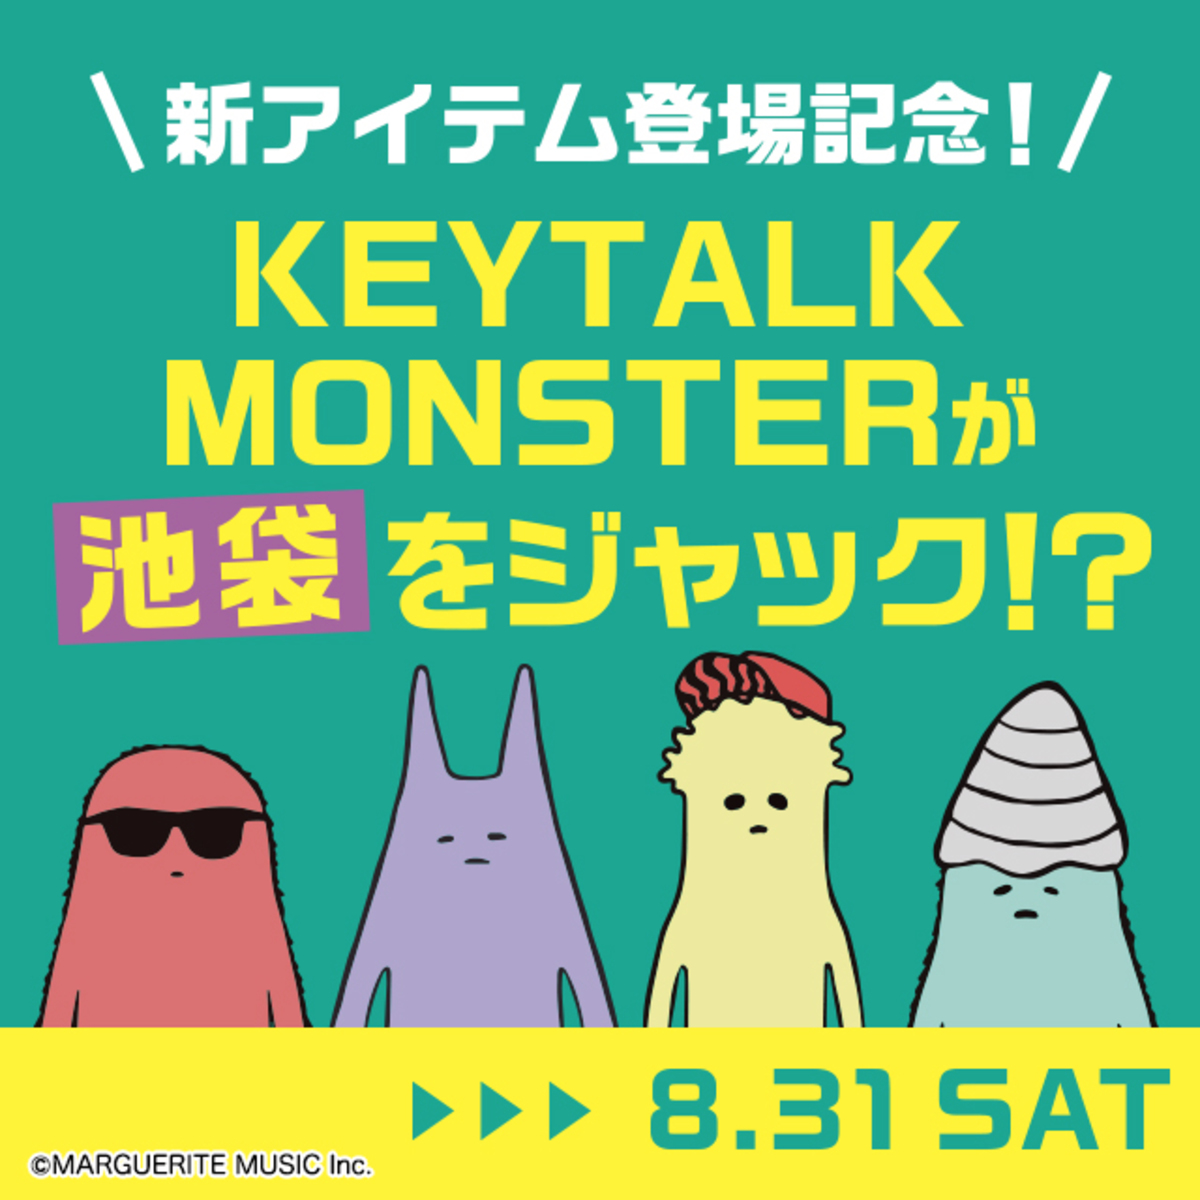 Keytalkの公式キャラクター Keytalk Monster のクレーンゲーム景品が8 30より登場 8 31池袋にてキャラクター とのグリーティング イベントも開催